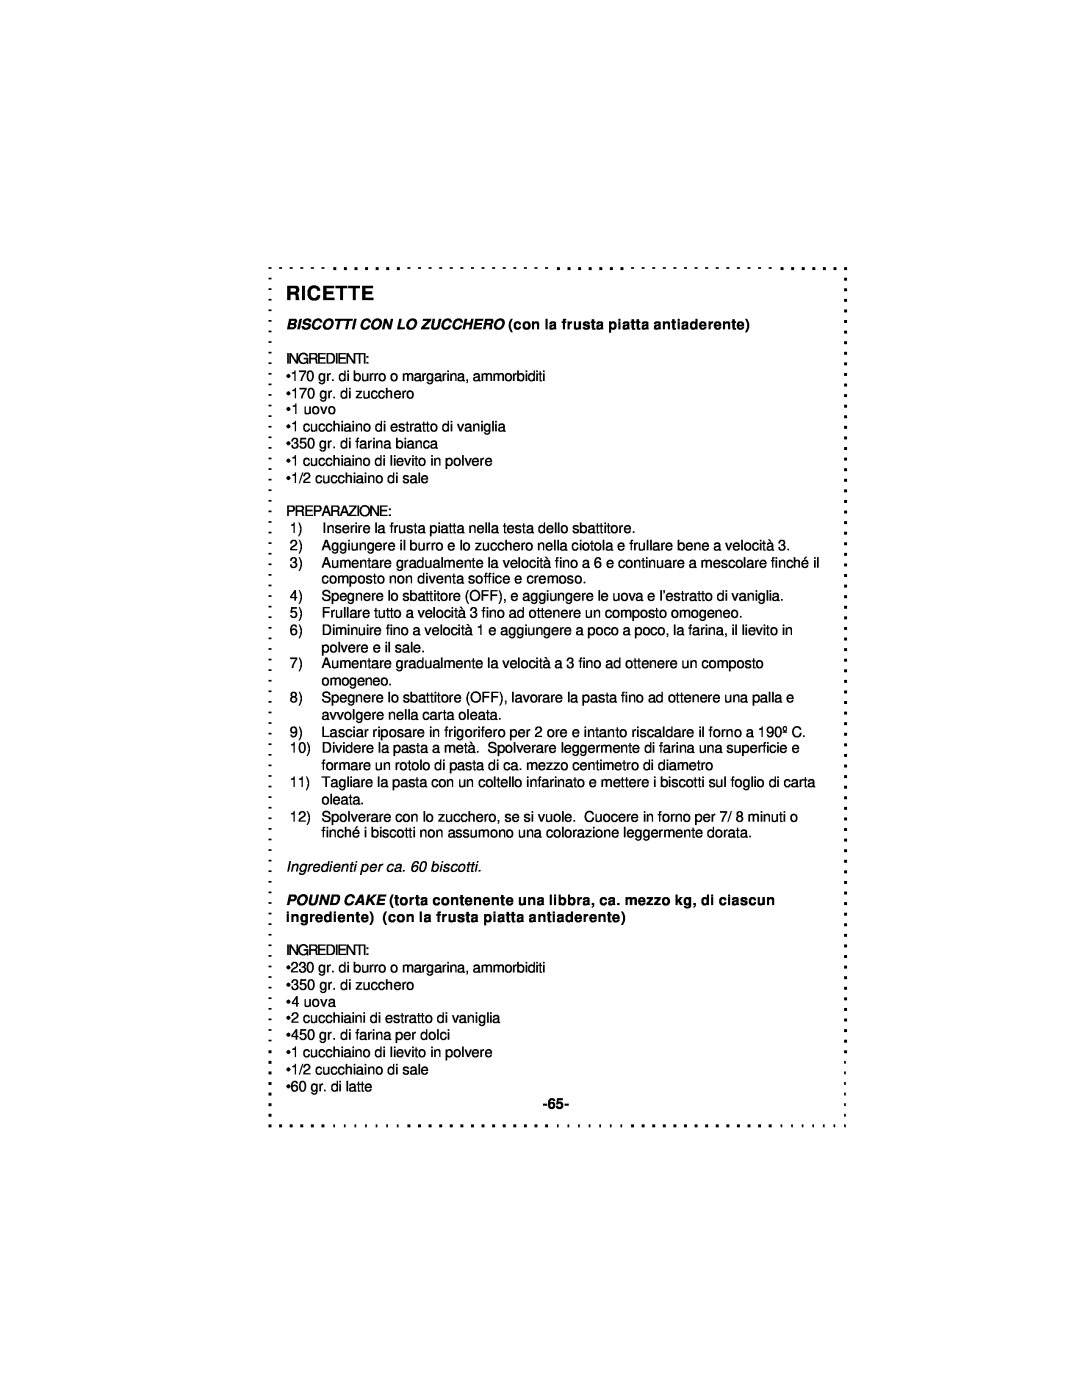 DeLonghi DSM5 - 7 Series instruction manual Ricette, Ingredienti per ca. 60 biscotti 